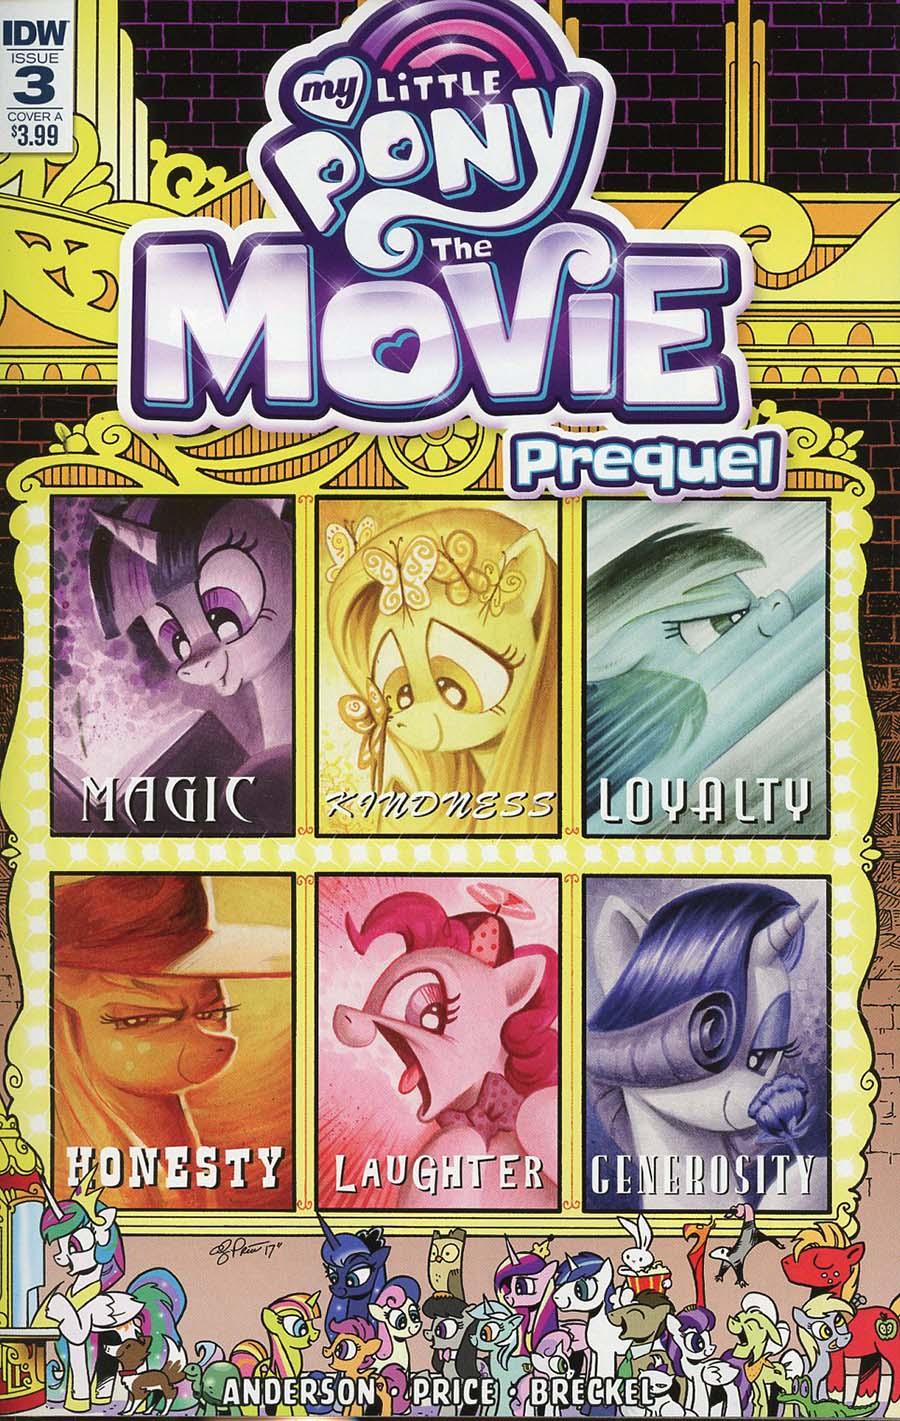 My Little Pony Movie Prequel Vol. 1 #3